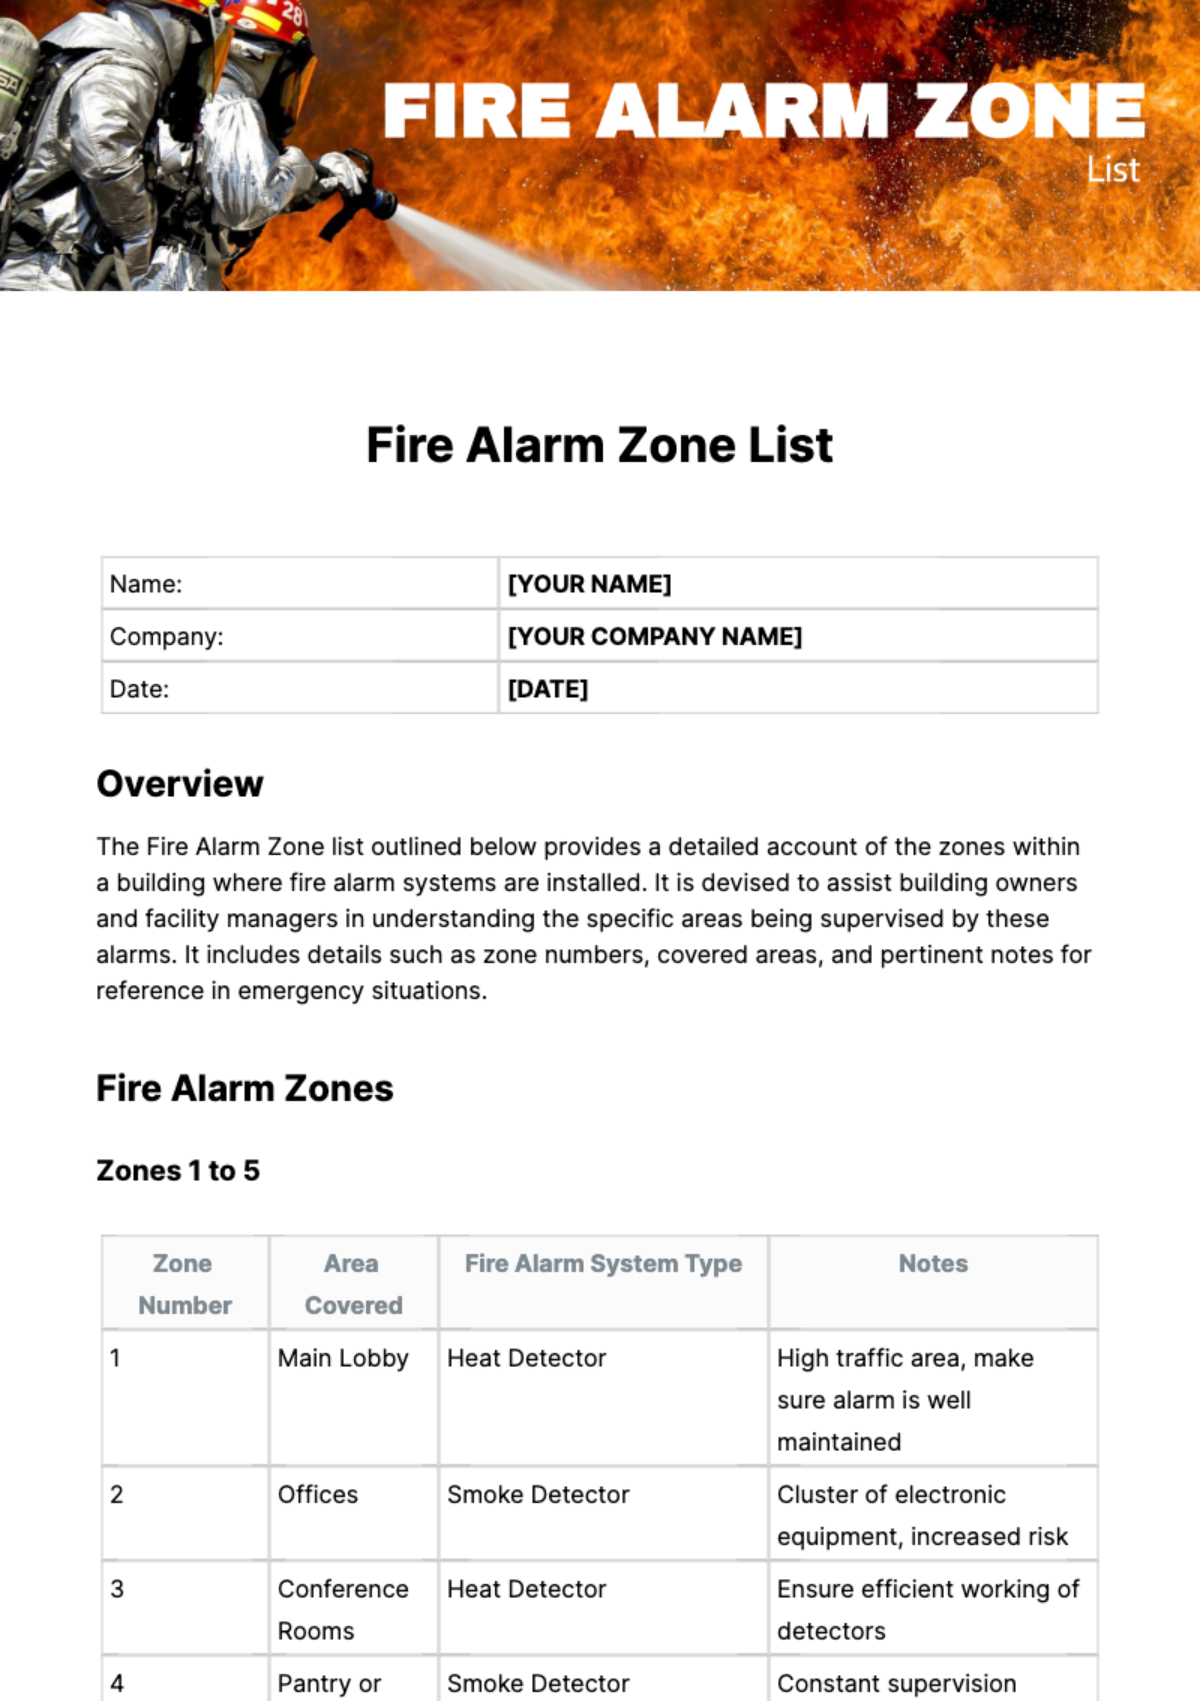 Fire Alarm Zone List Template